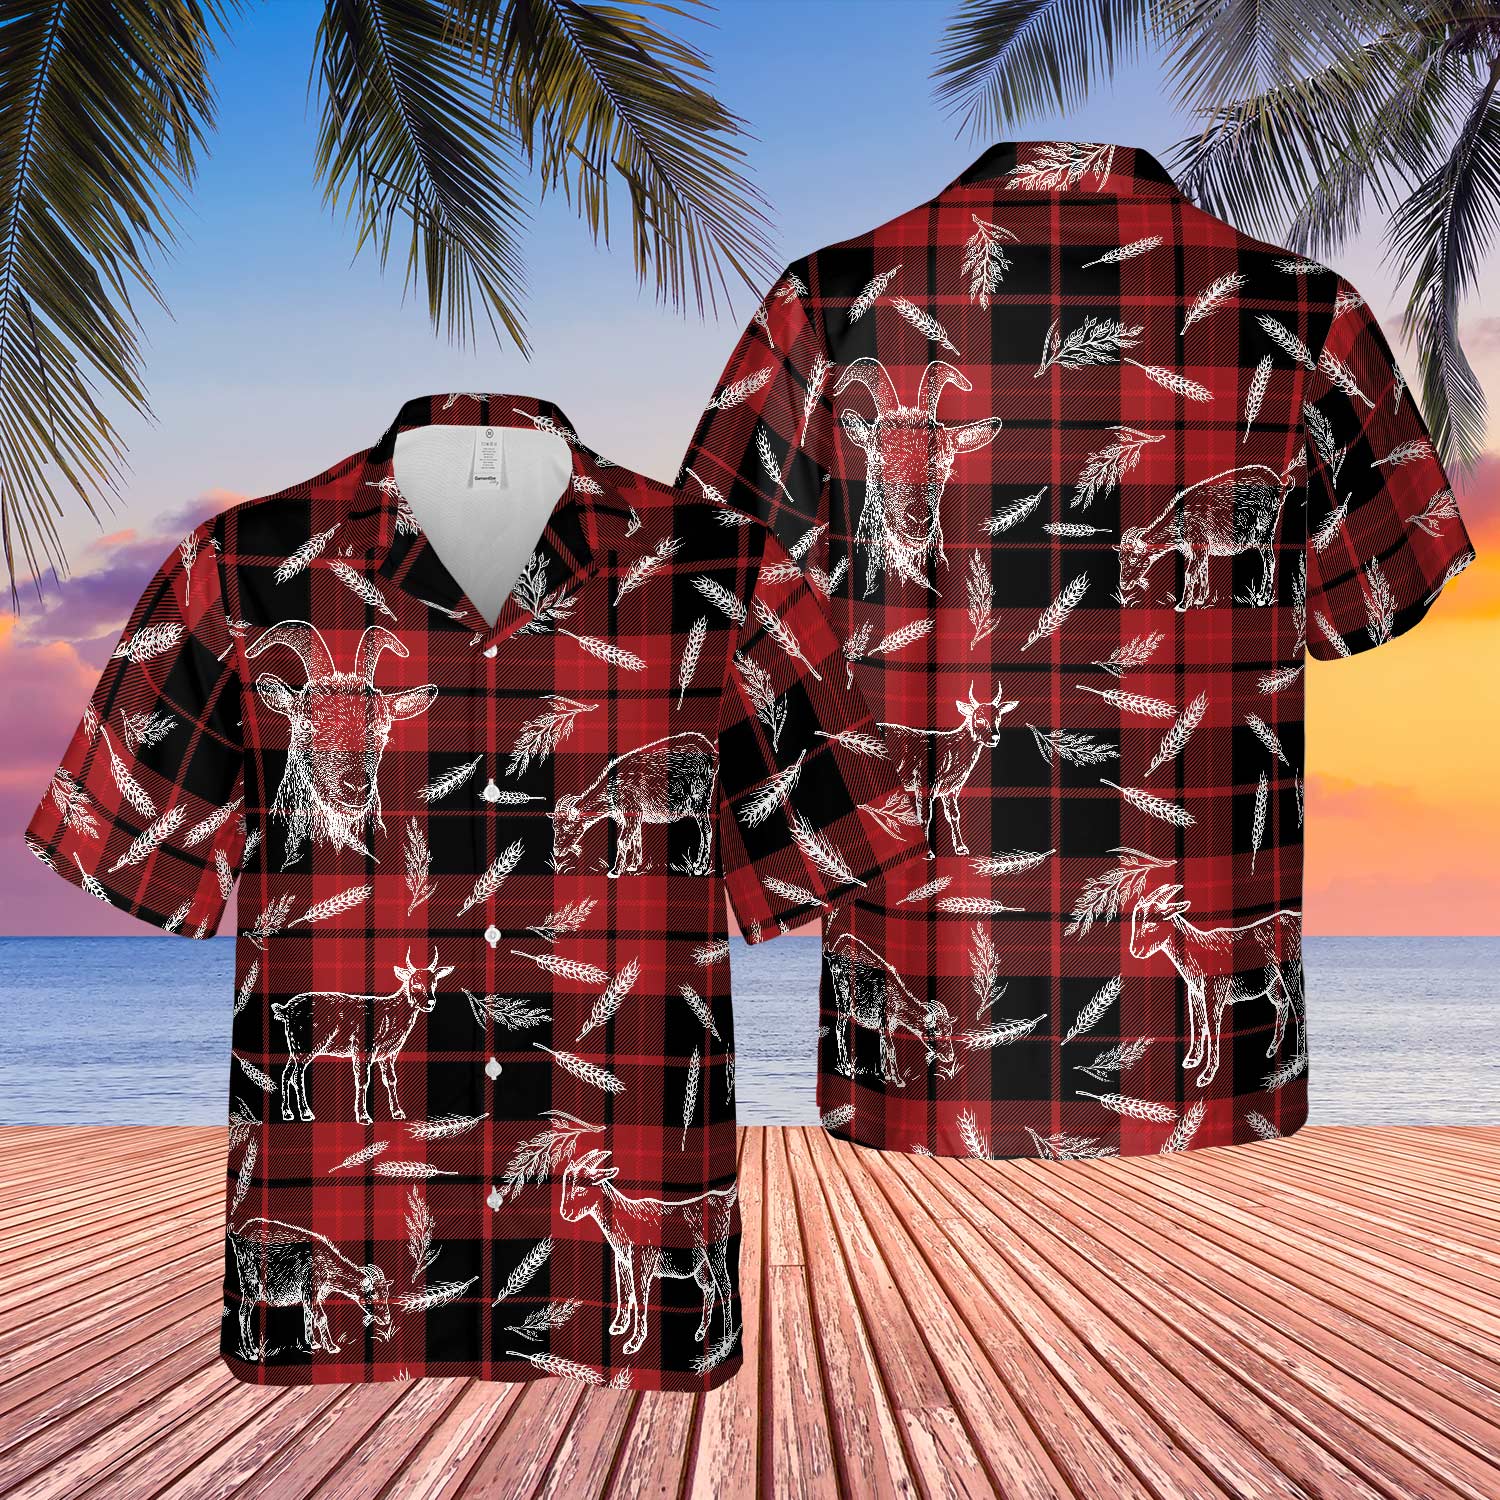 Plaid Pattern Goat All Over Printed 3D Hawaiian Shirt